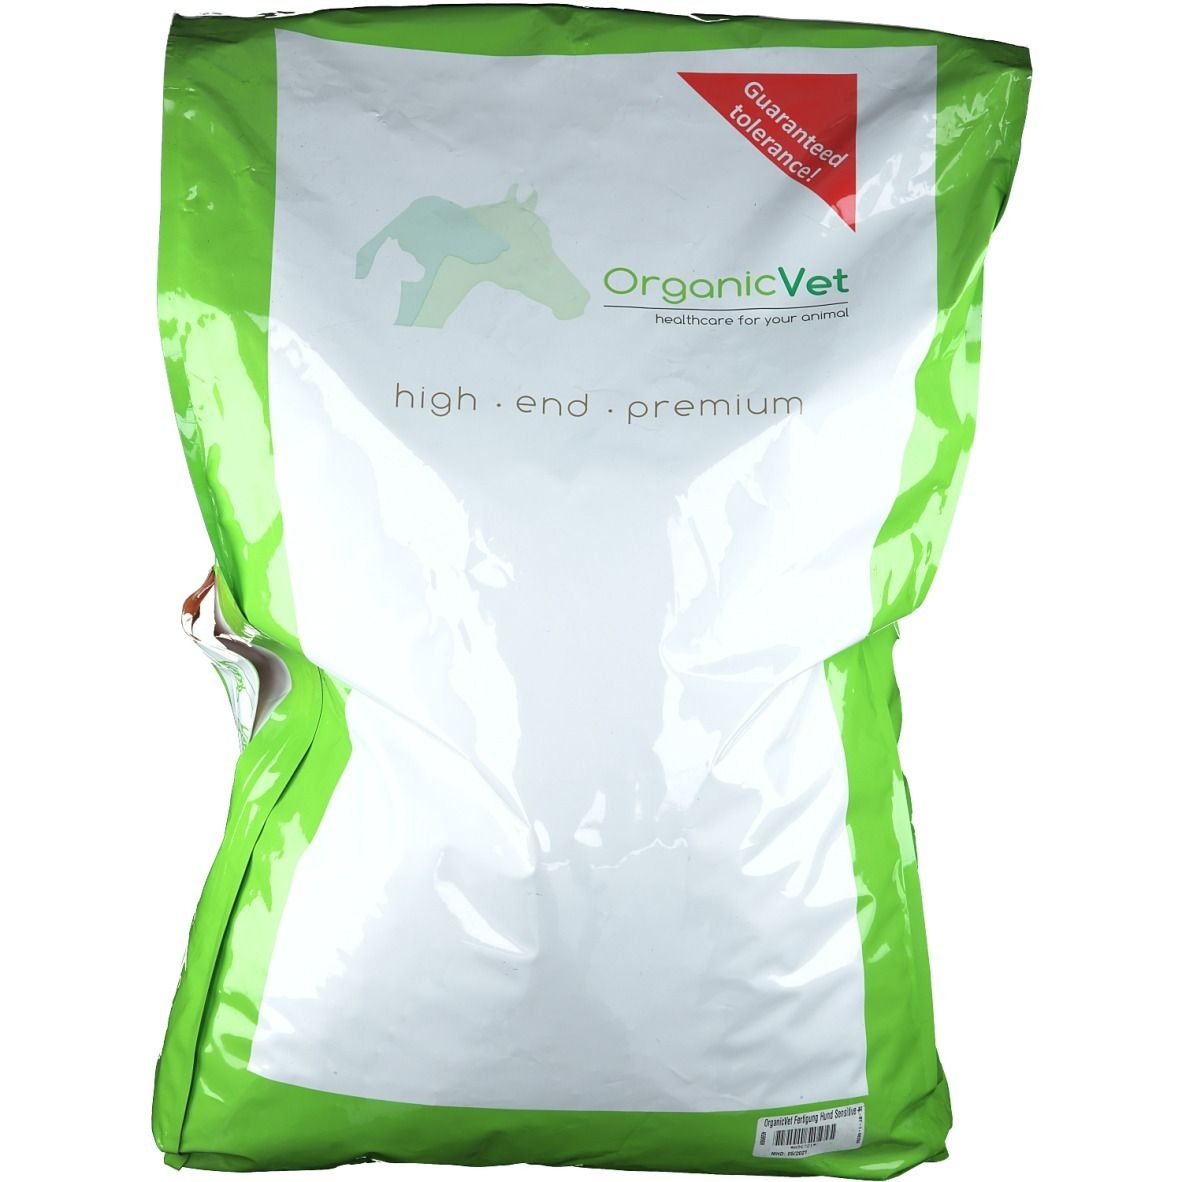 OrganicVet HUND Trockenfutter SENSITIVE+ Ente & Kartoffel